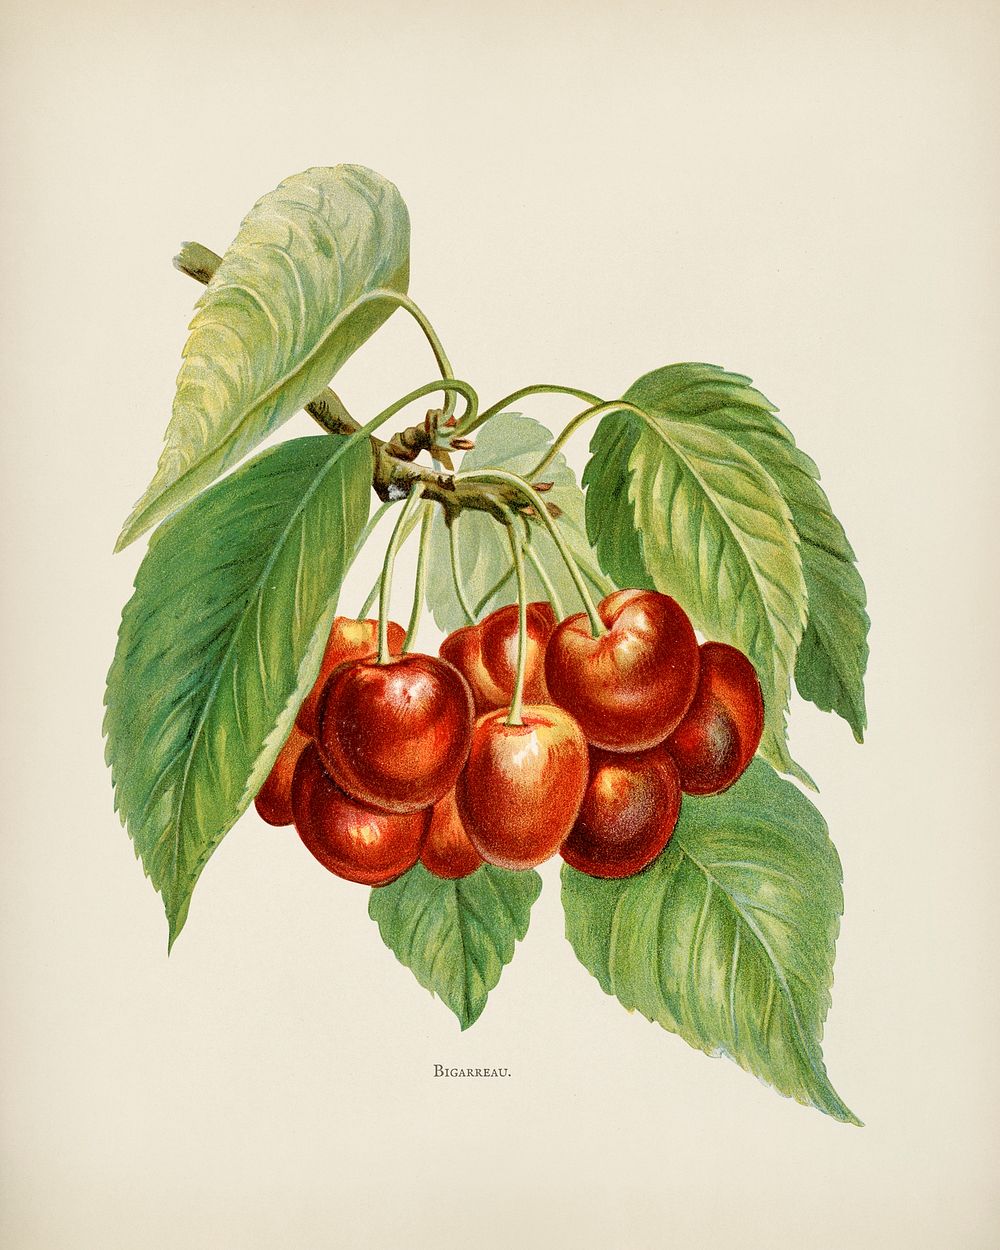 The fruit grower's guide : Vintage illustration of bigarreau cherries